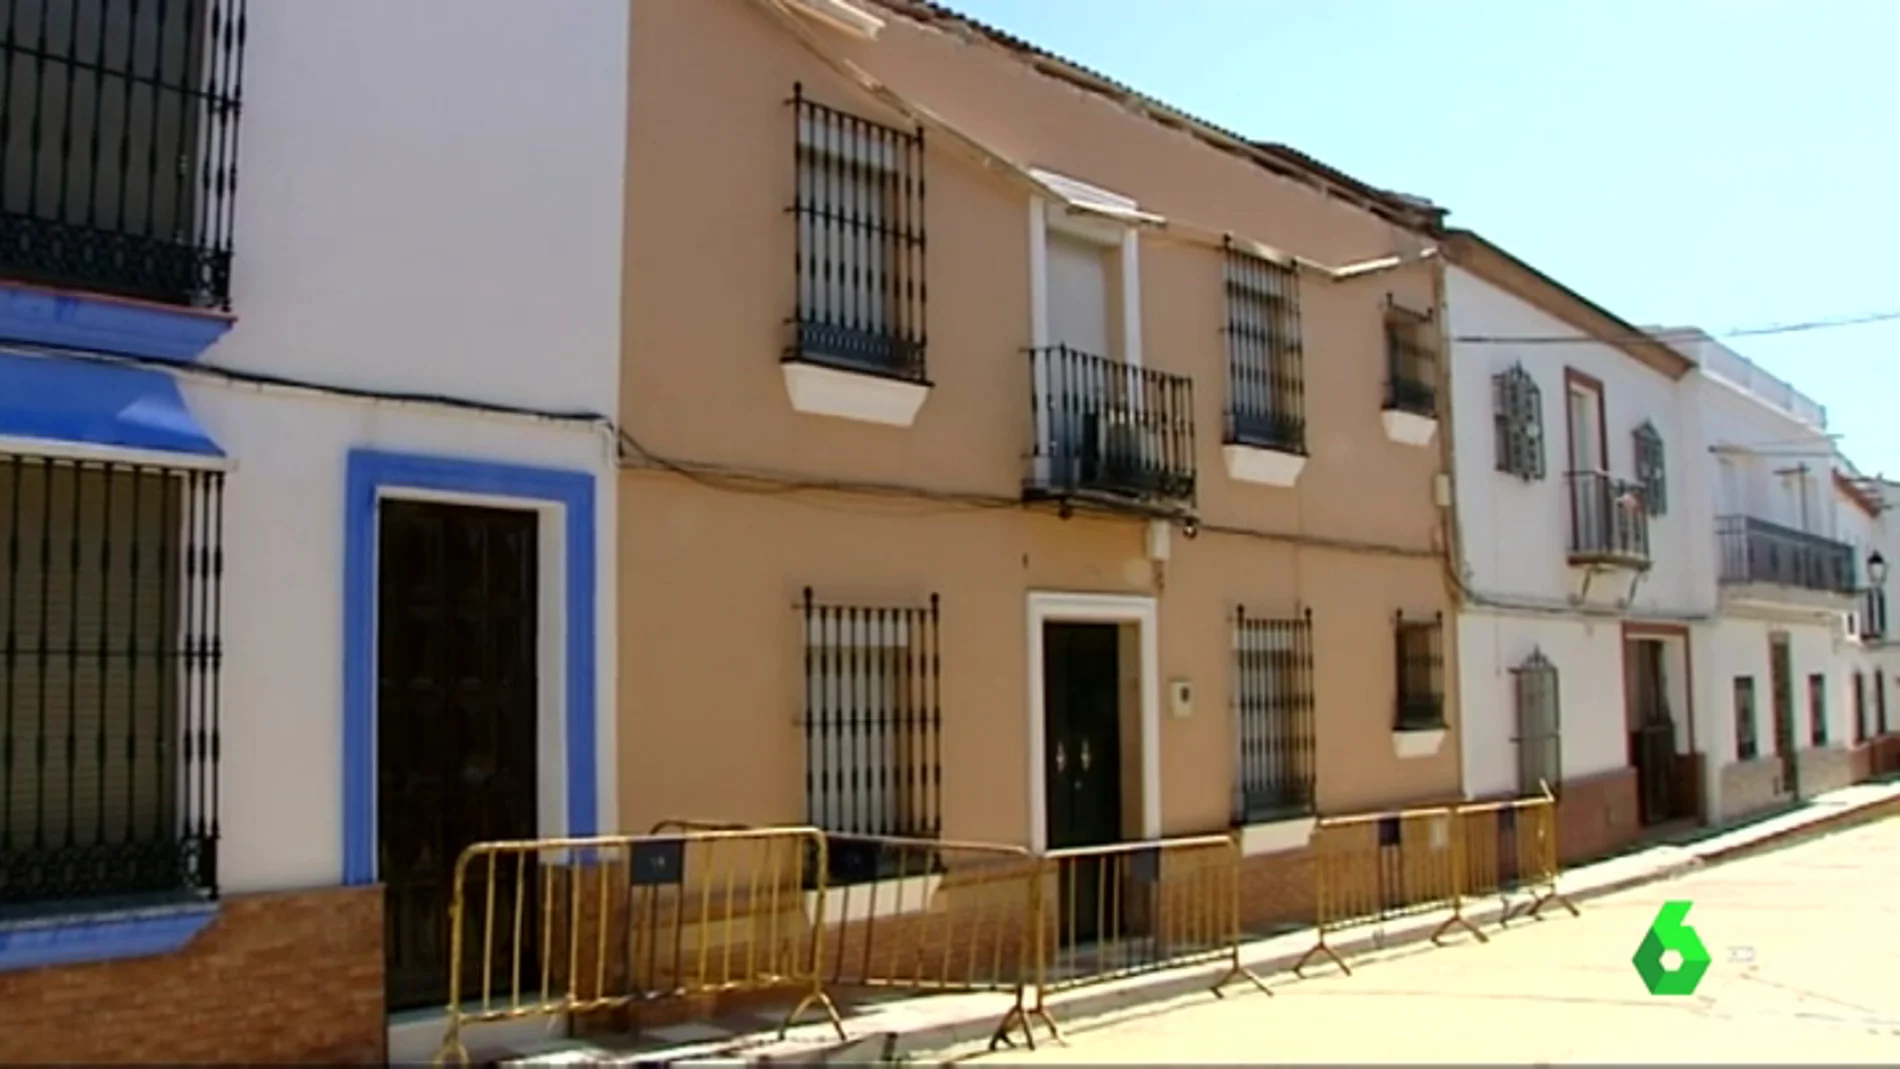 La cornisa de una vivienda en Sevilla